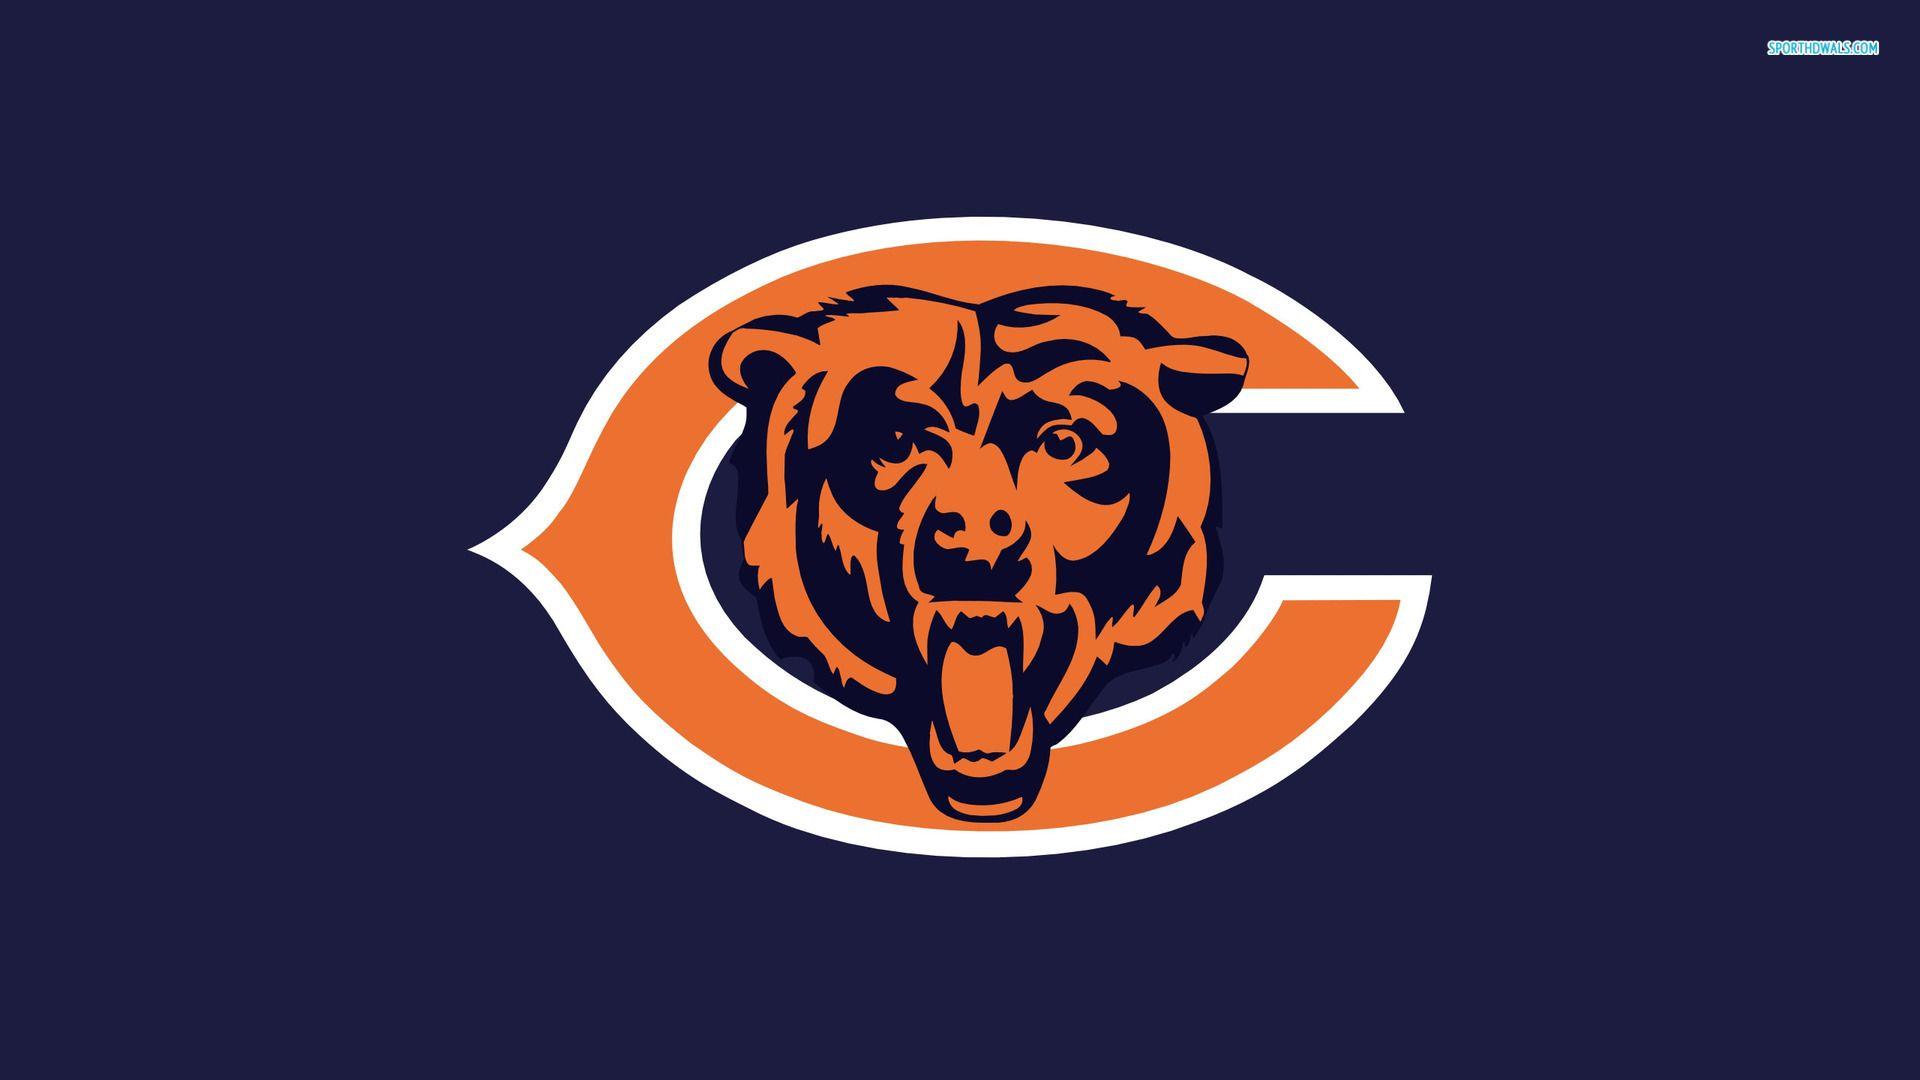 Chicago Bears 2014